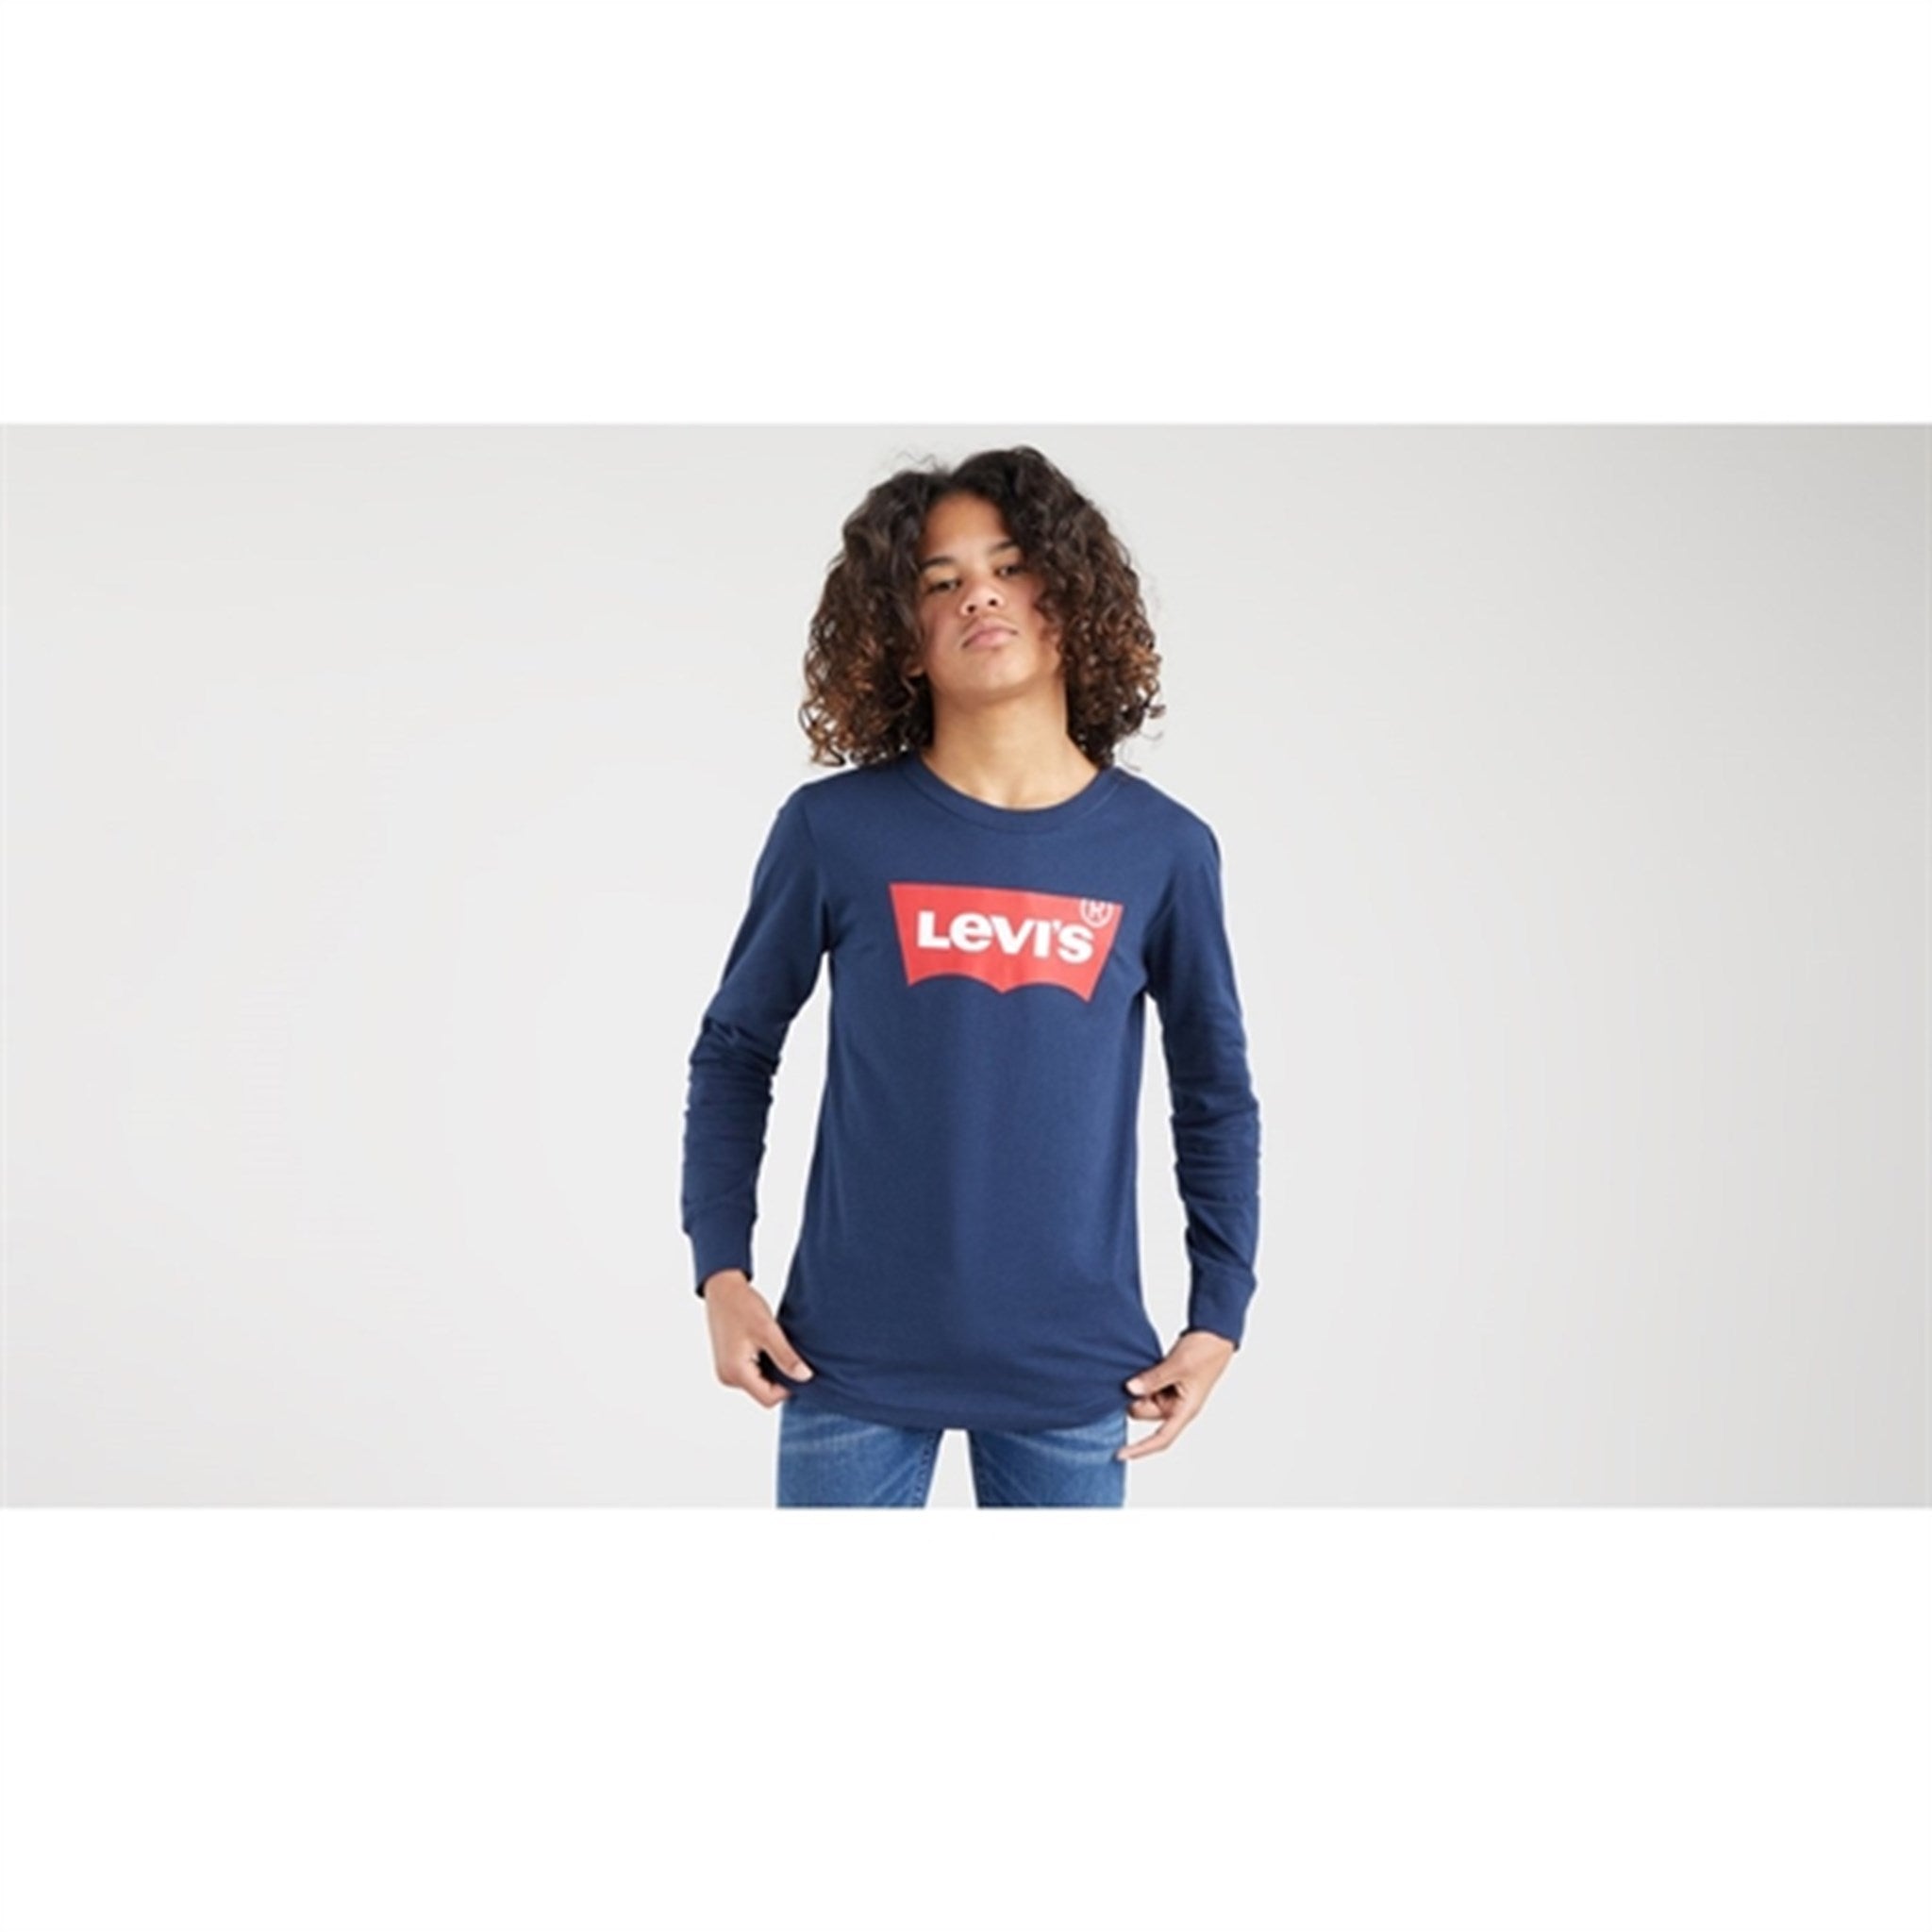 Levi's Long Sleeve Batwing T-Shirt Dress Blues